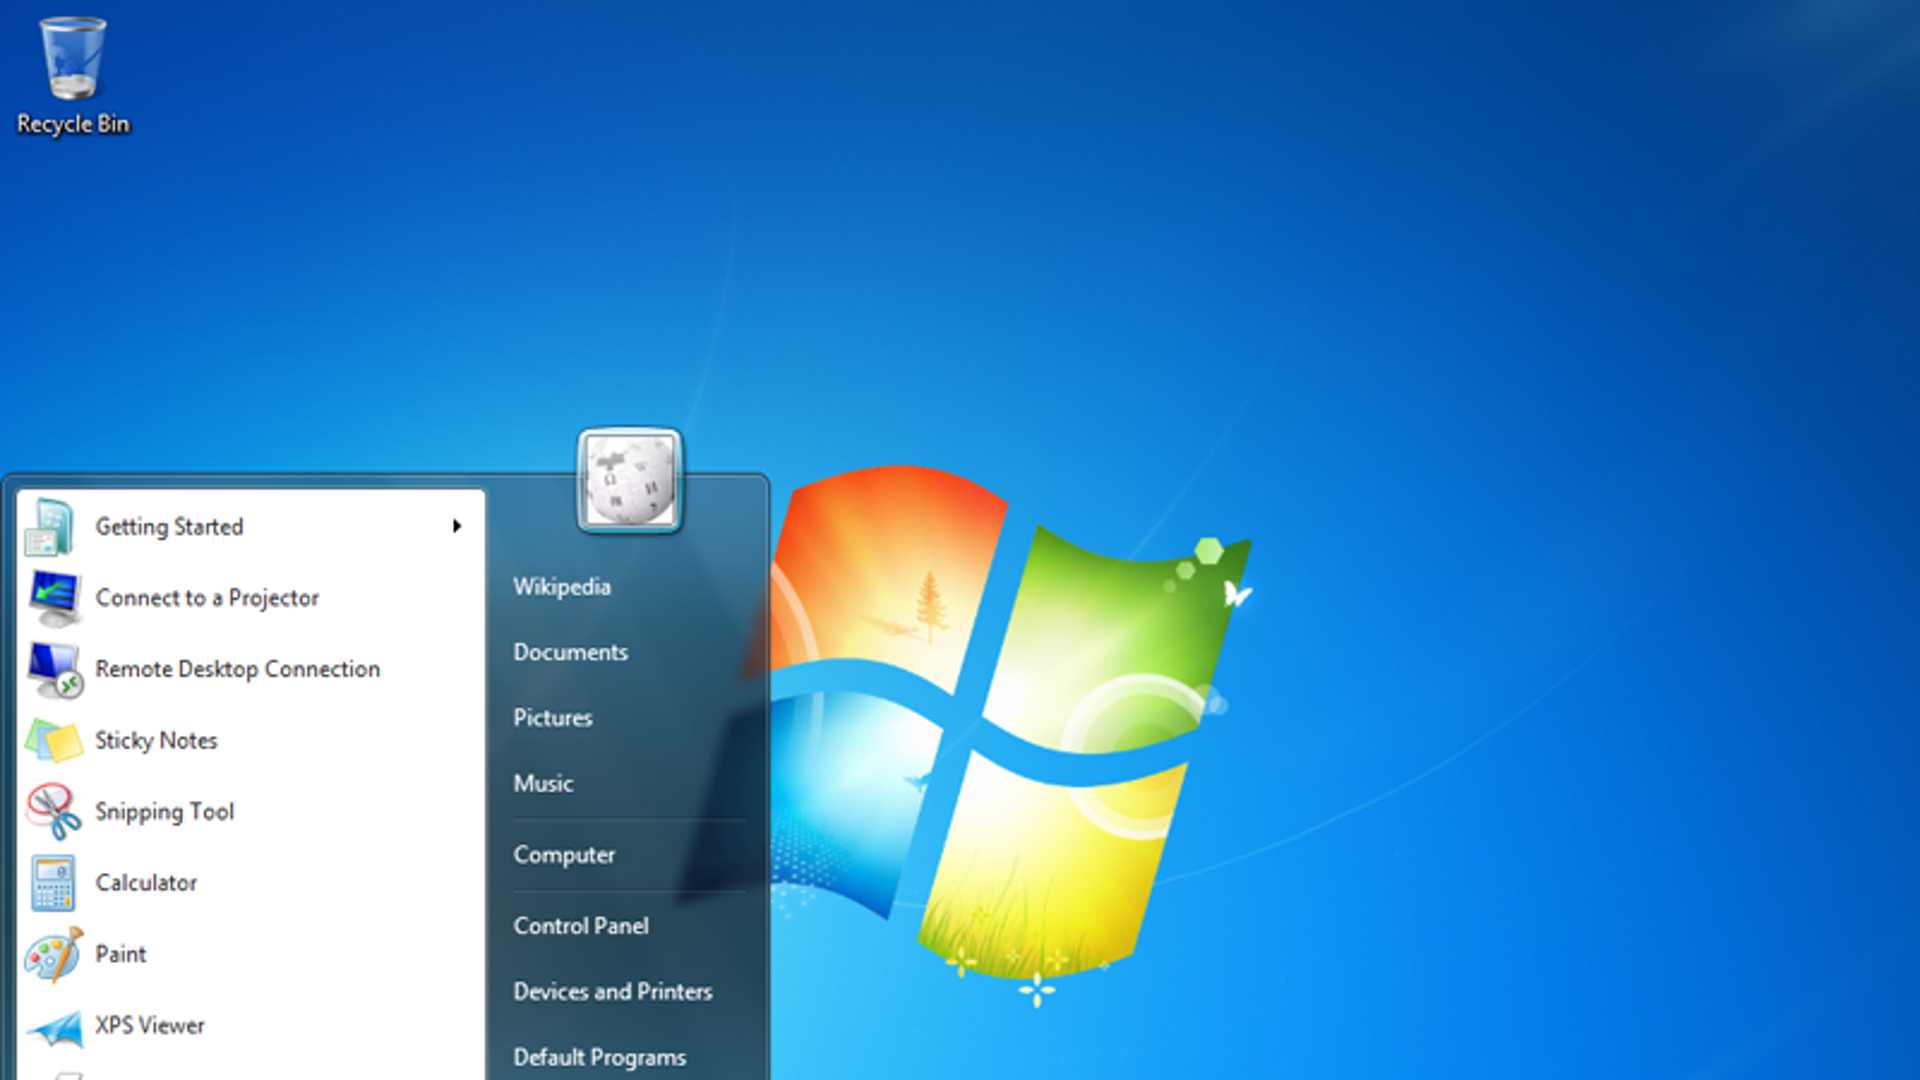 Win 7 re. Меню пуск Windows 7. Windows 7 Интерфейс. Windows 7 рабочий стол. Скрин рабочего стола Windows 7.